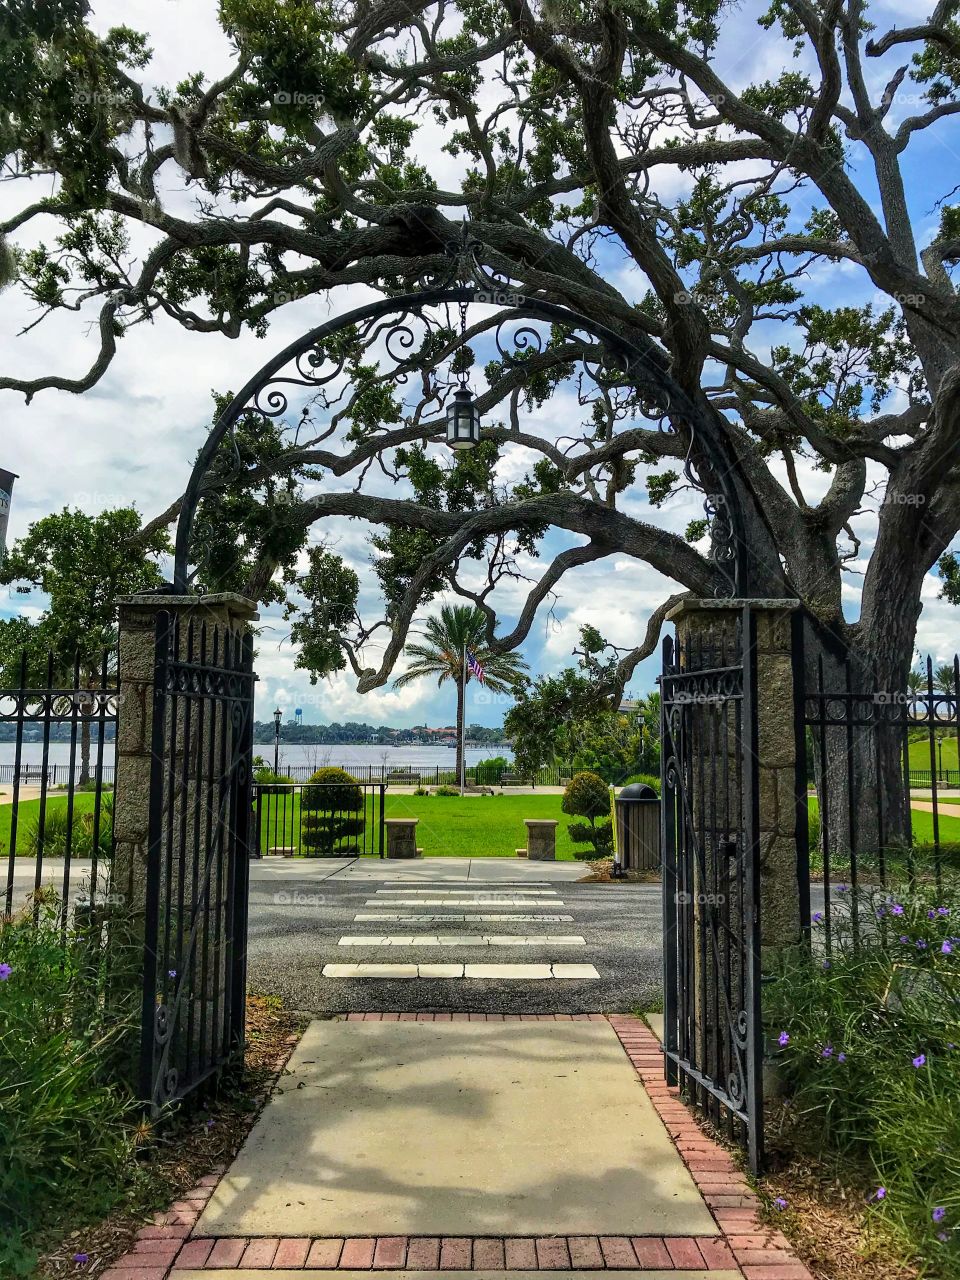 The Casements Gate - 1913 Rockefeller Estate, Ormond Beach, FL